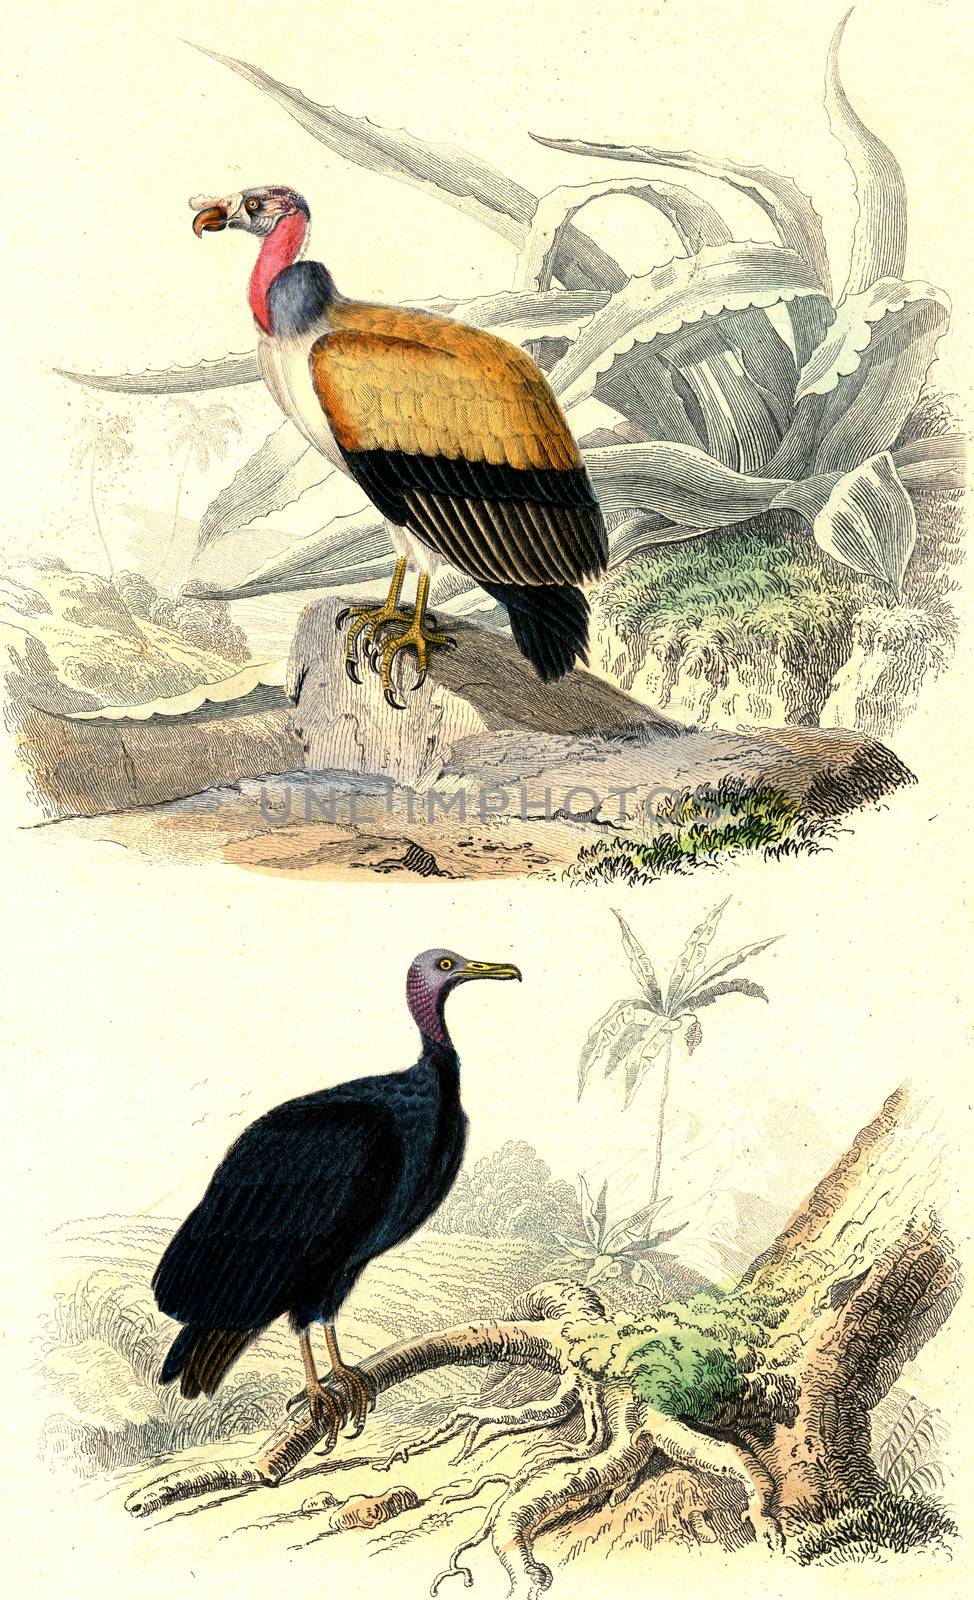 The king vultures, Vultures, vintage engraving. by Morphart